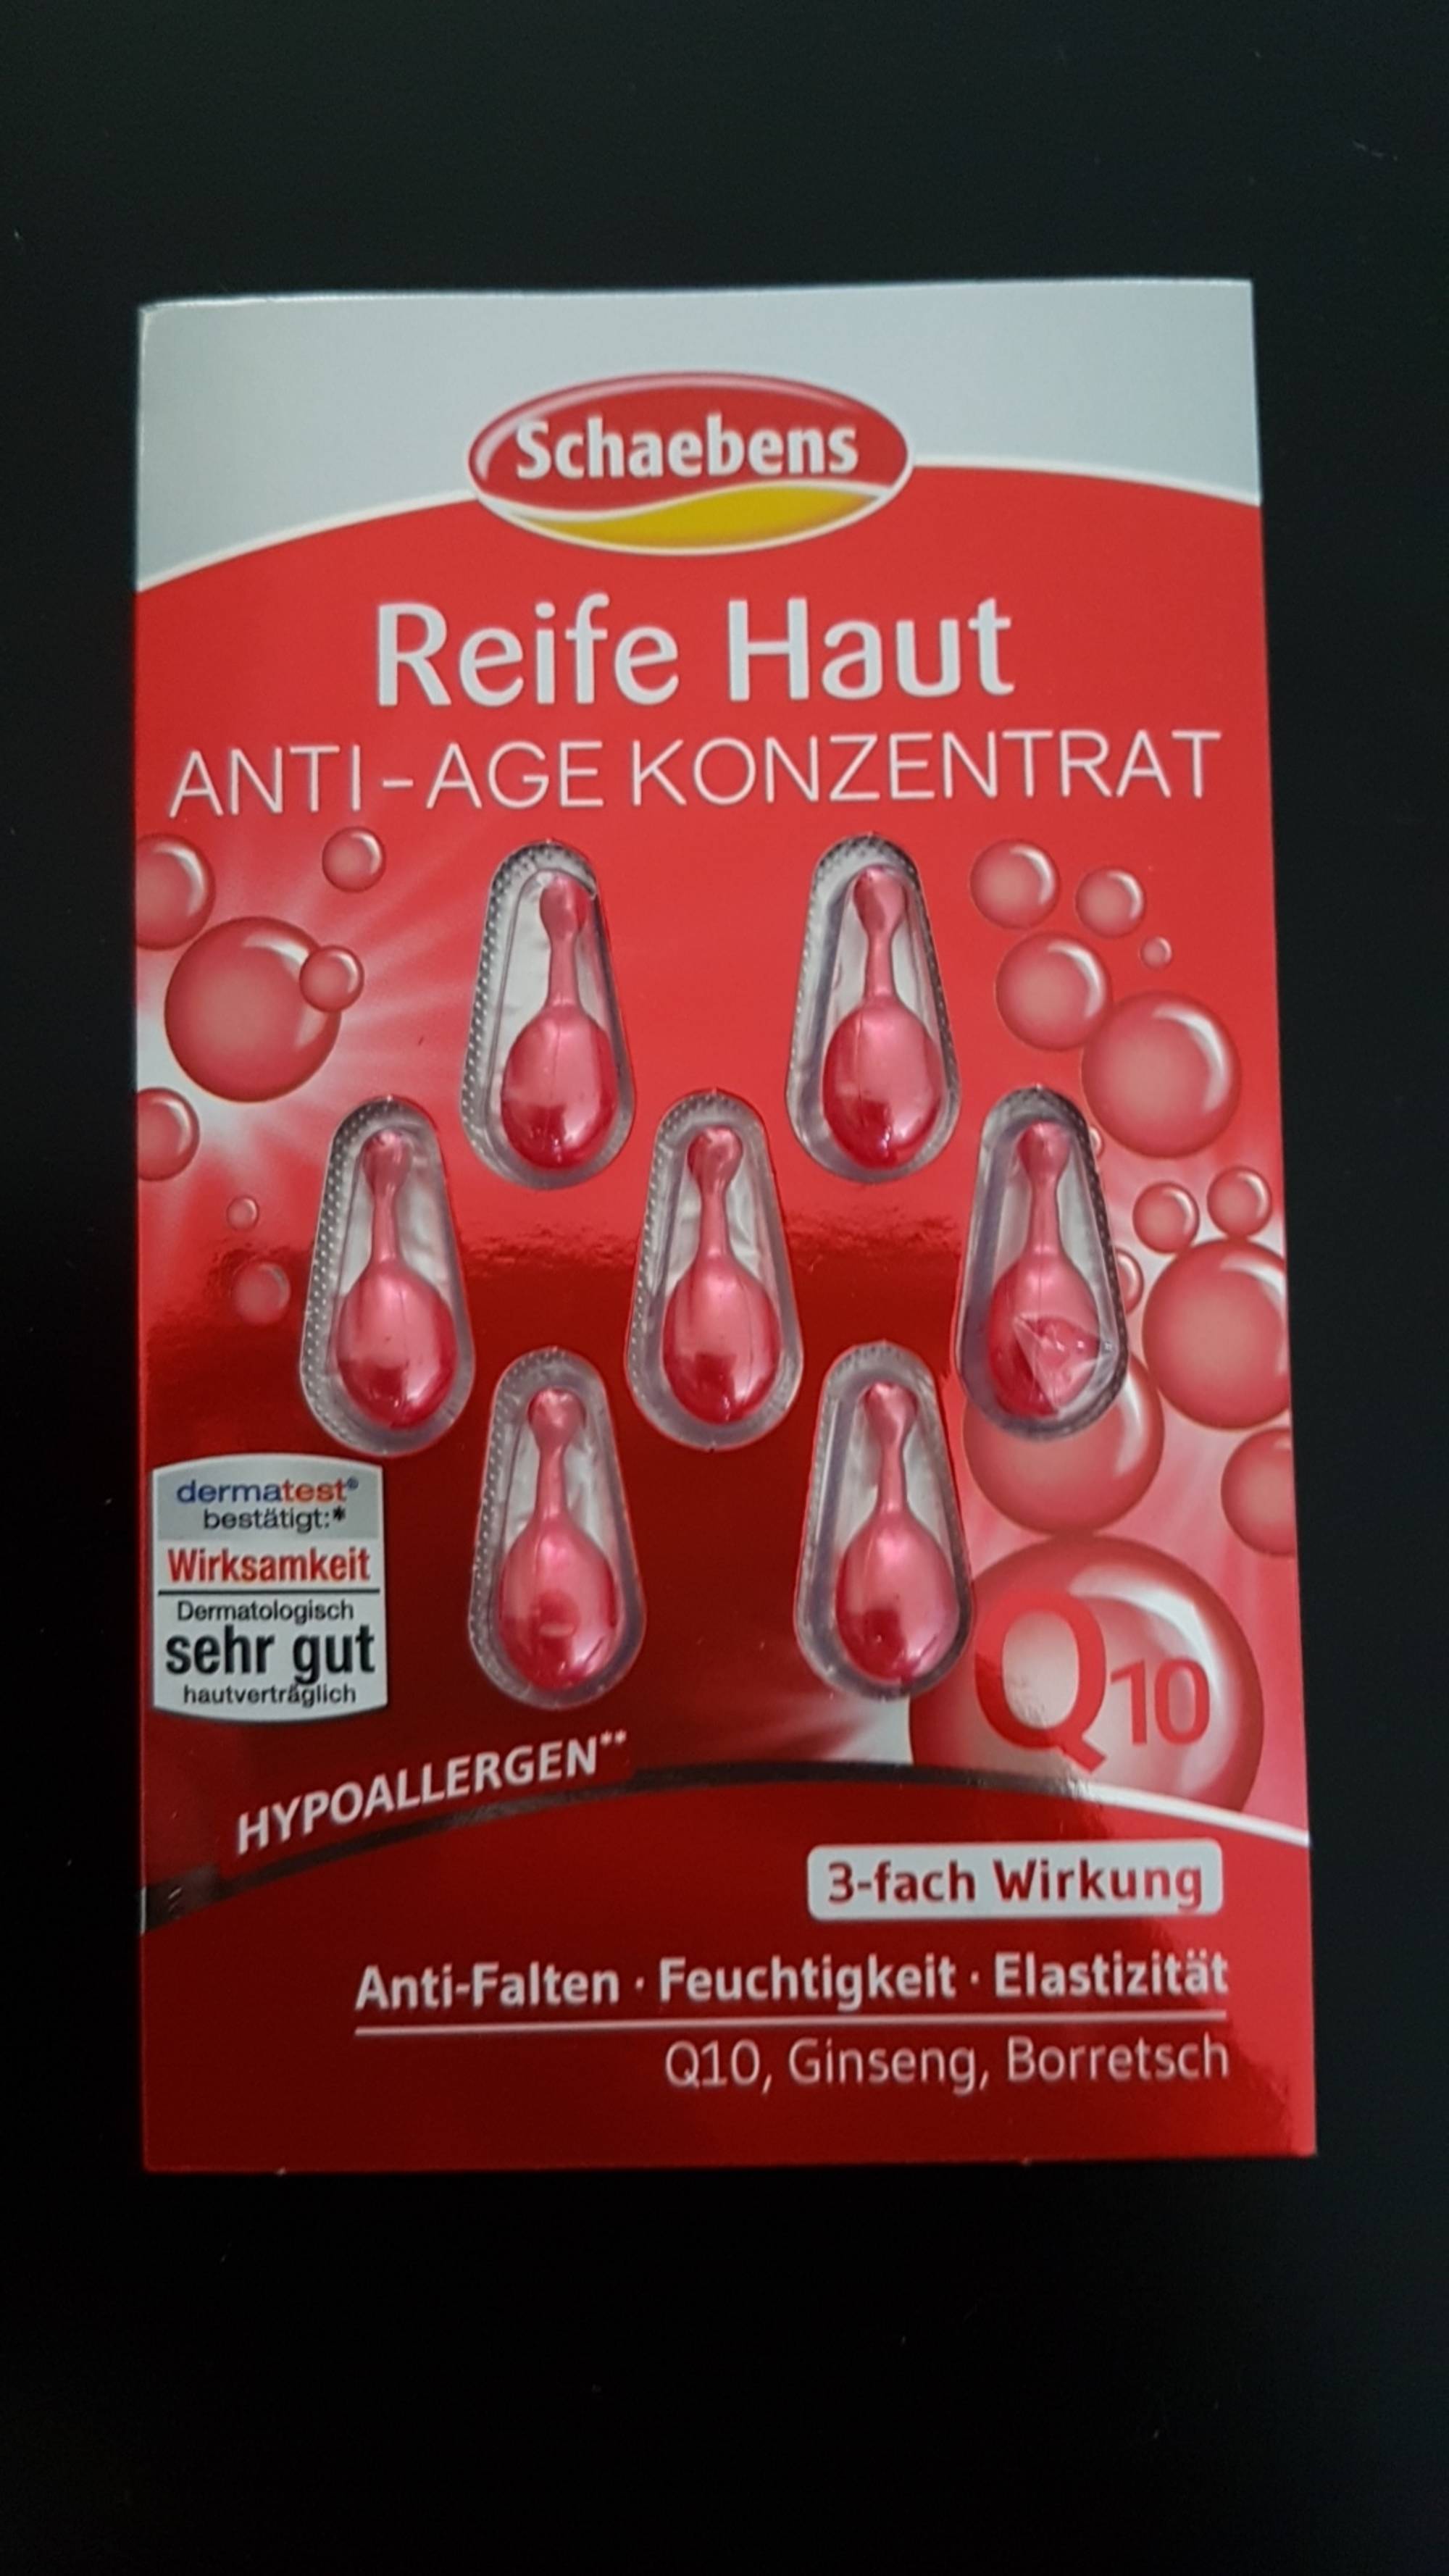 SCHAEBENS - Reife Haut Q10 - Anti-age konzentrat